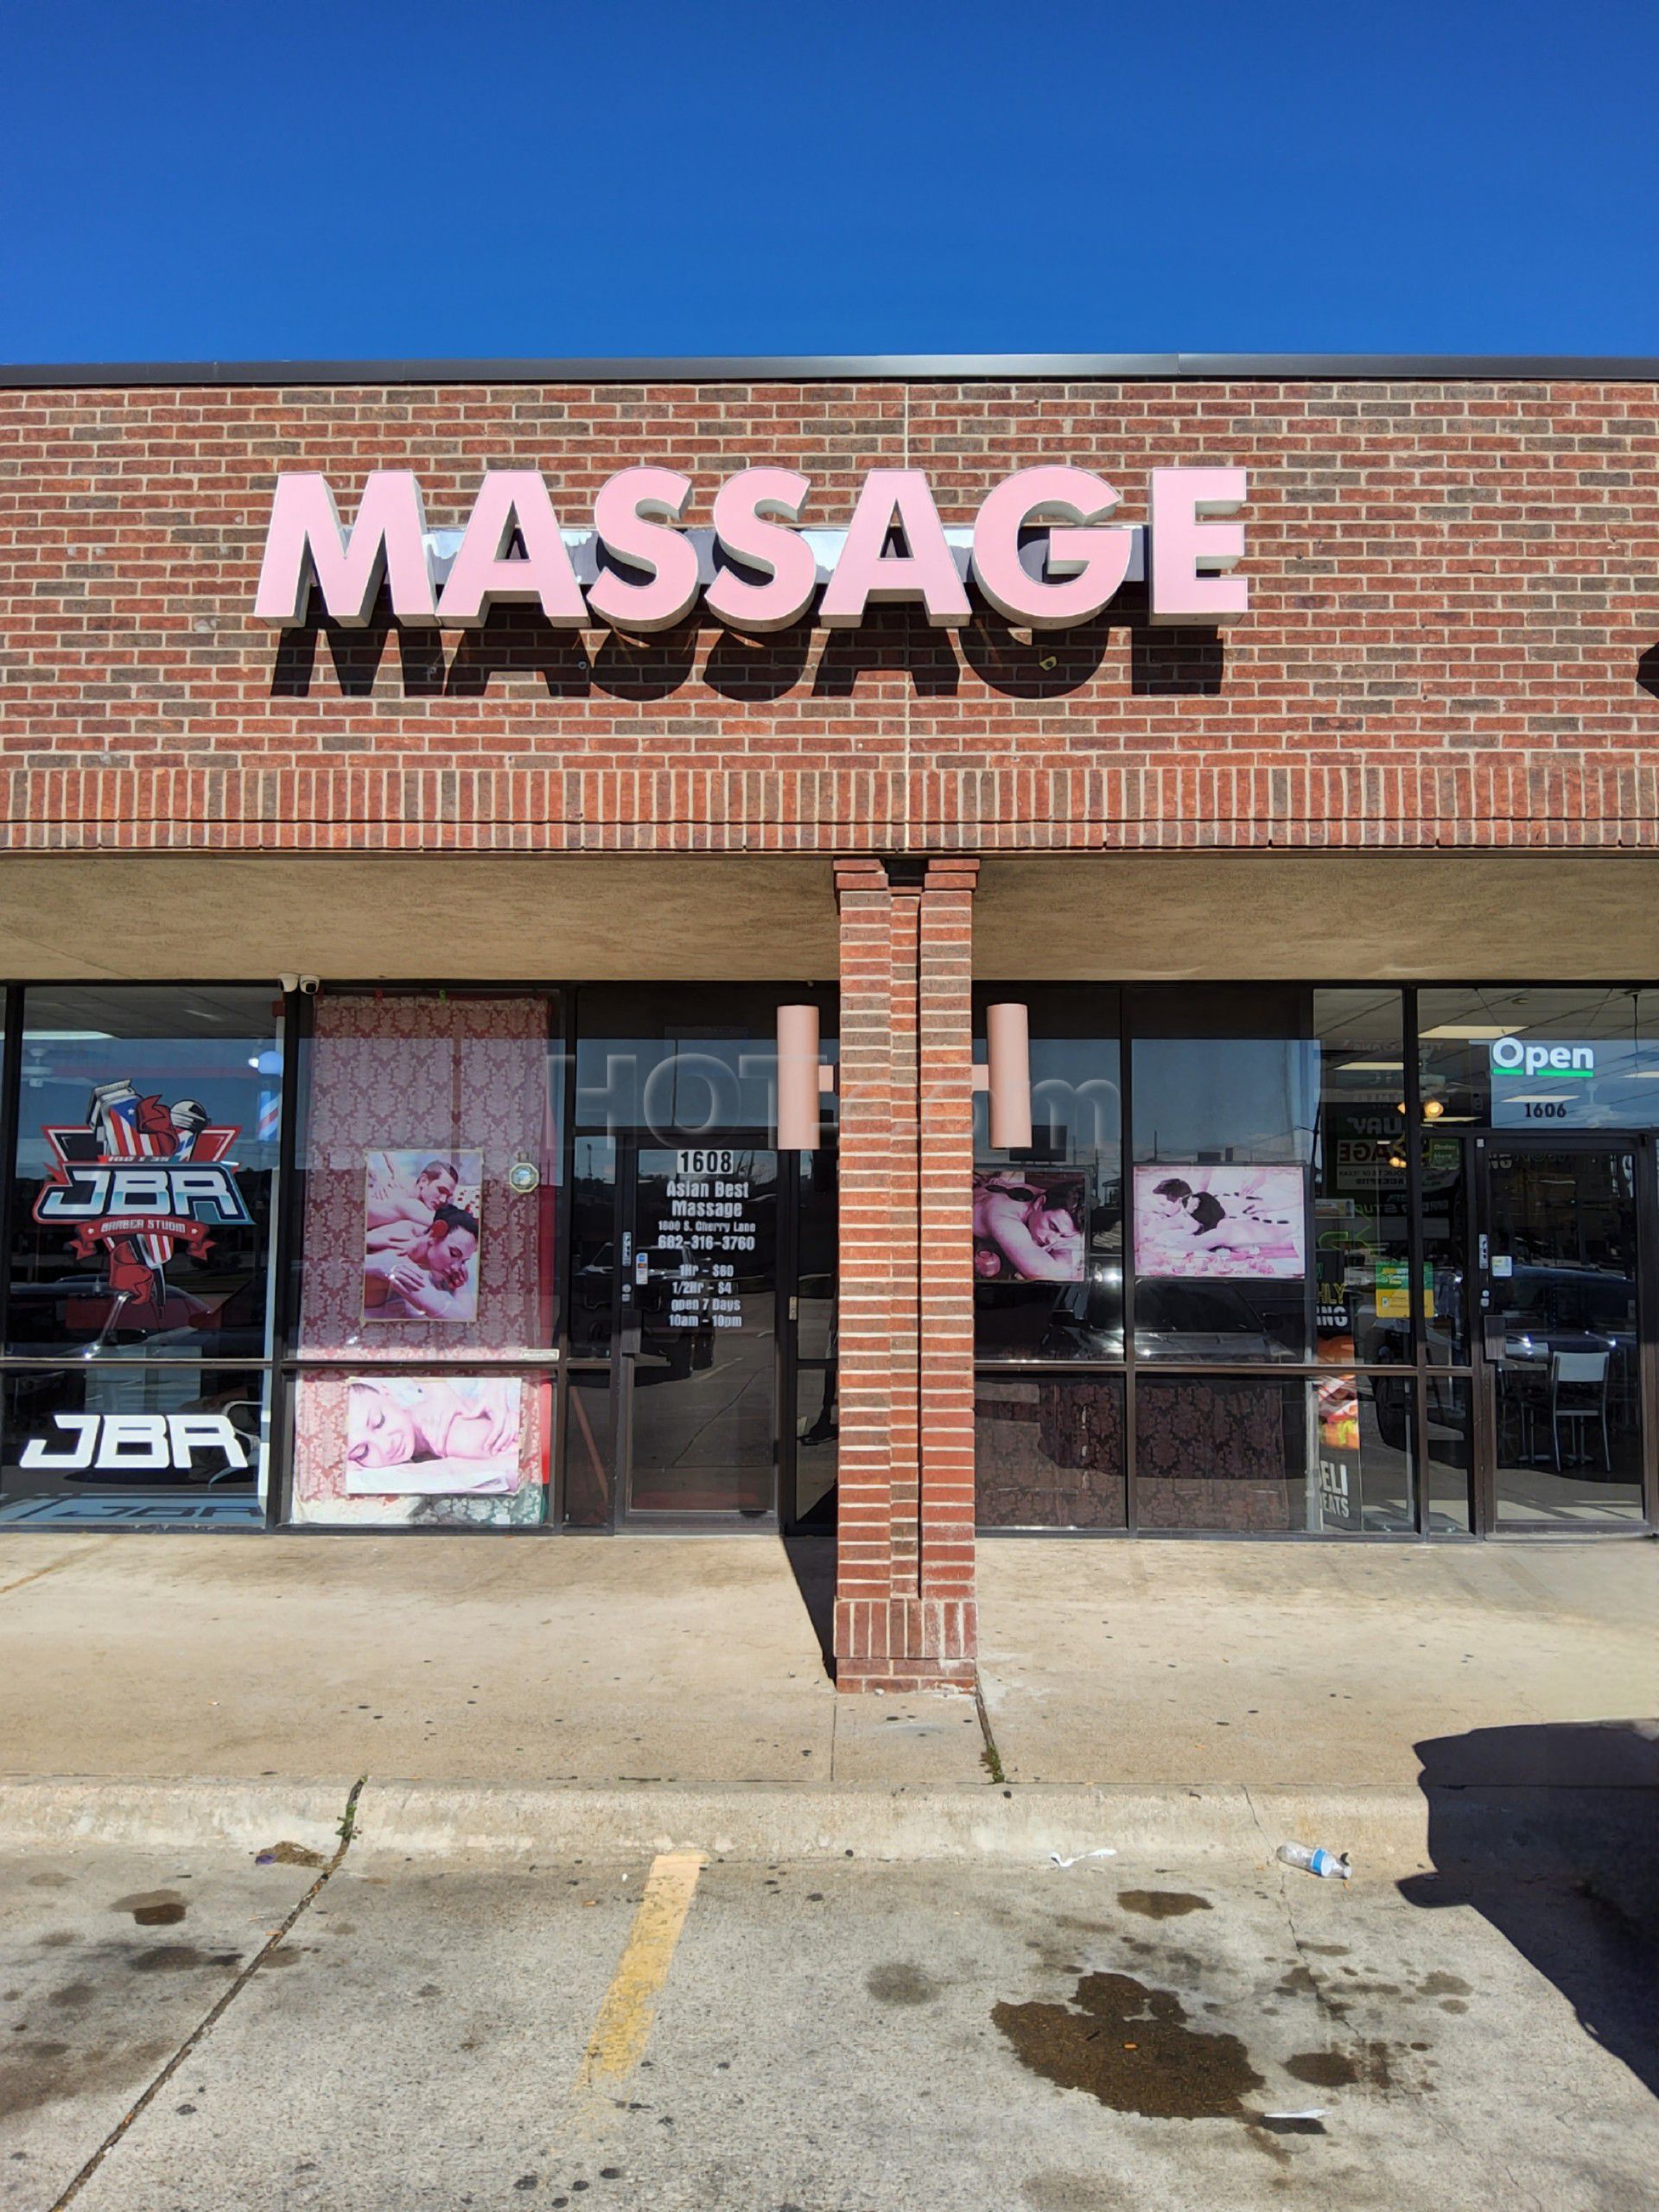 Fort Worth, Texas Best Asian Massage